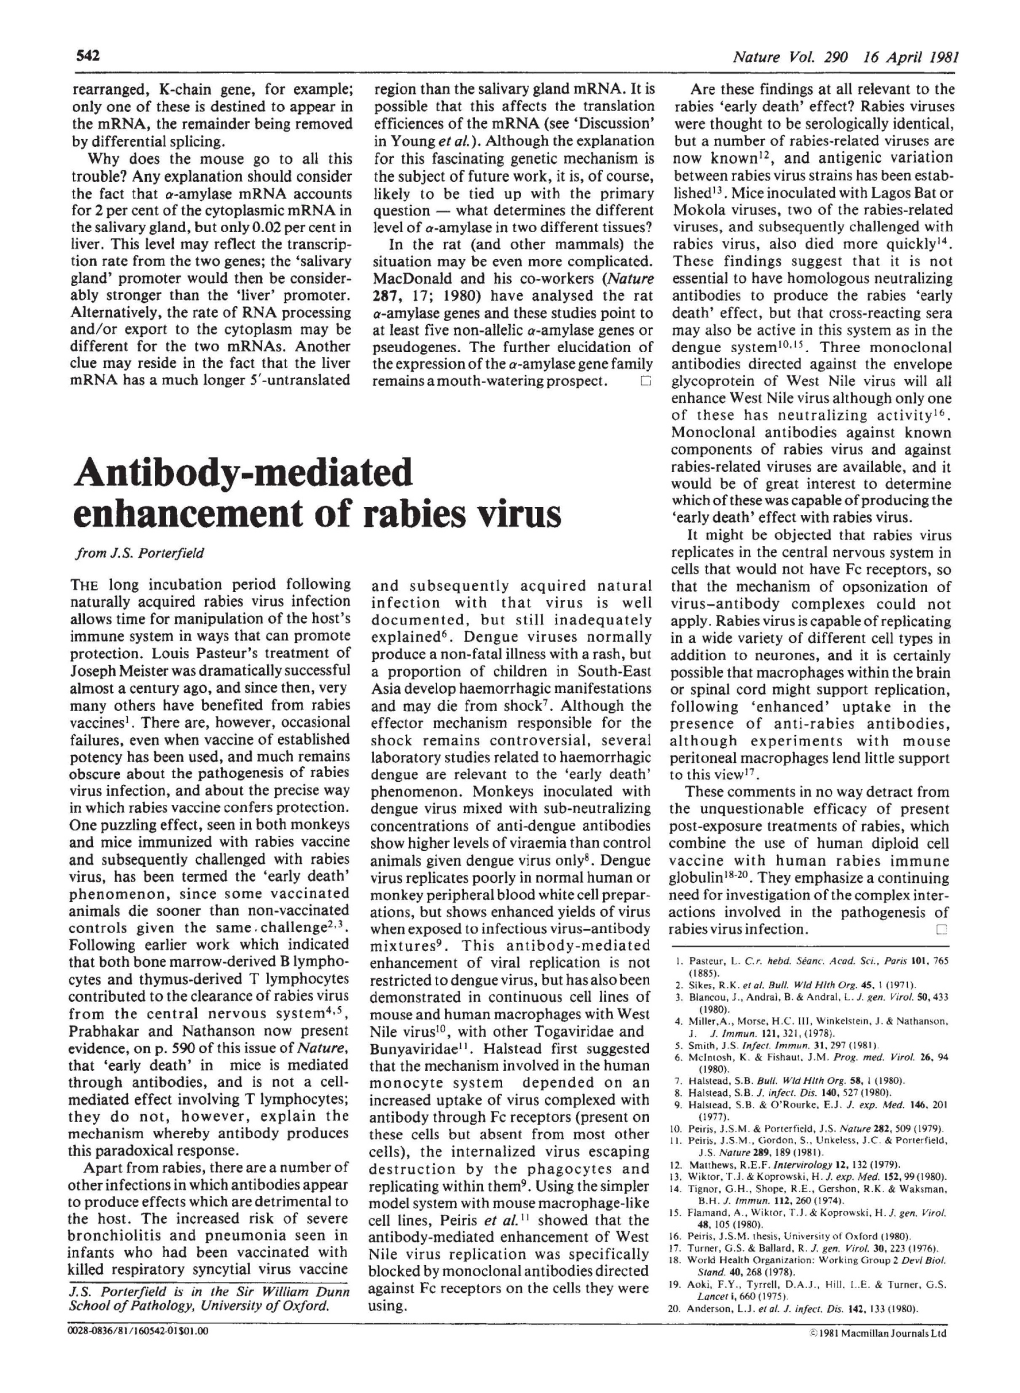 Antibody-Mediated Enhancement of Rabies Virus